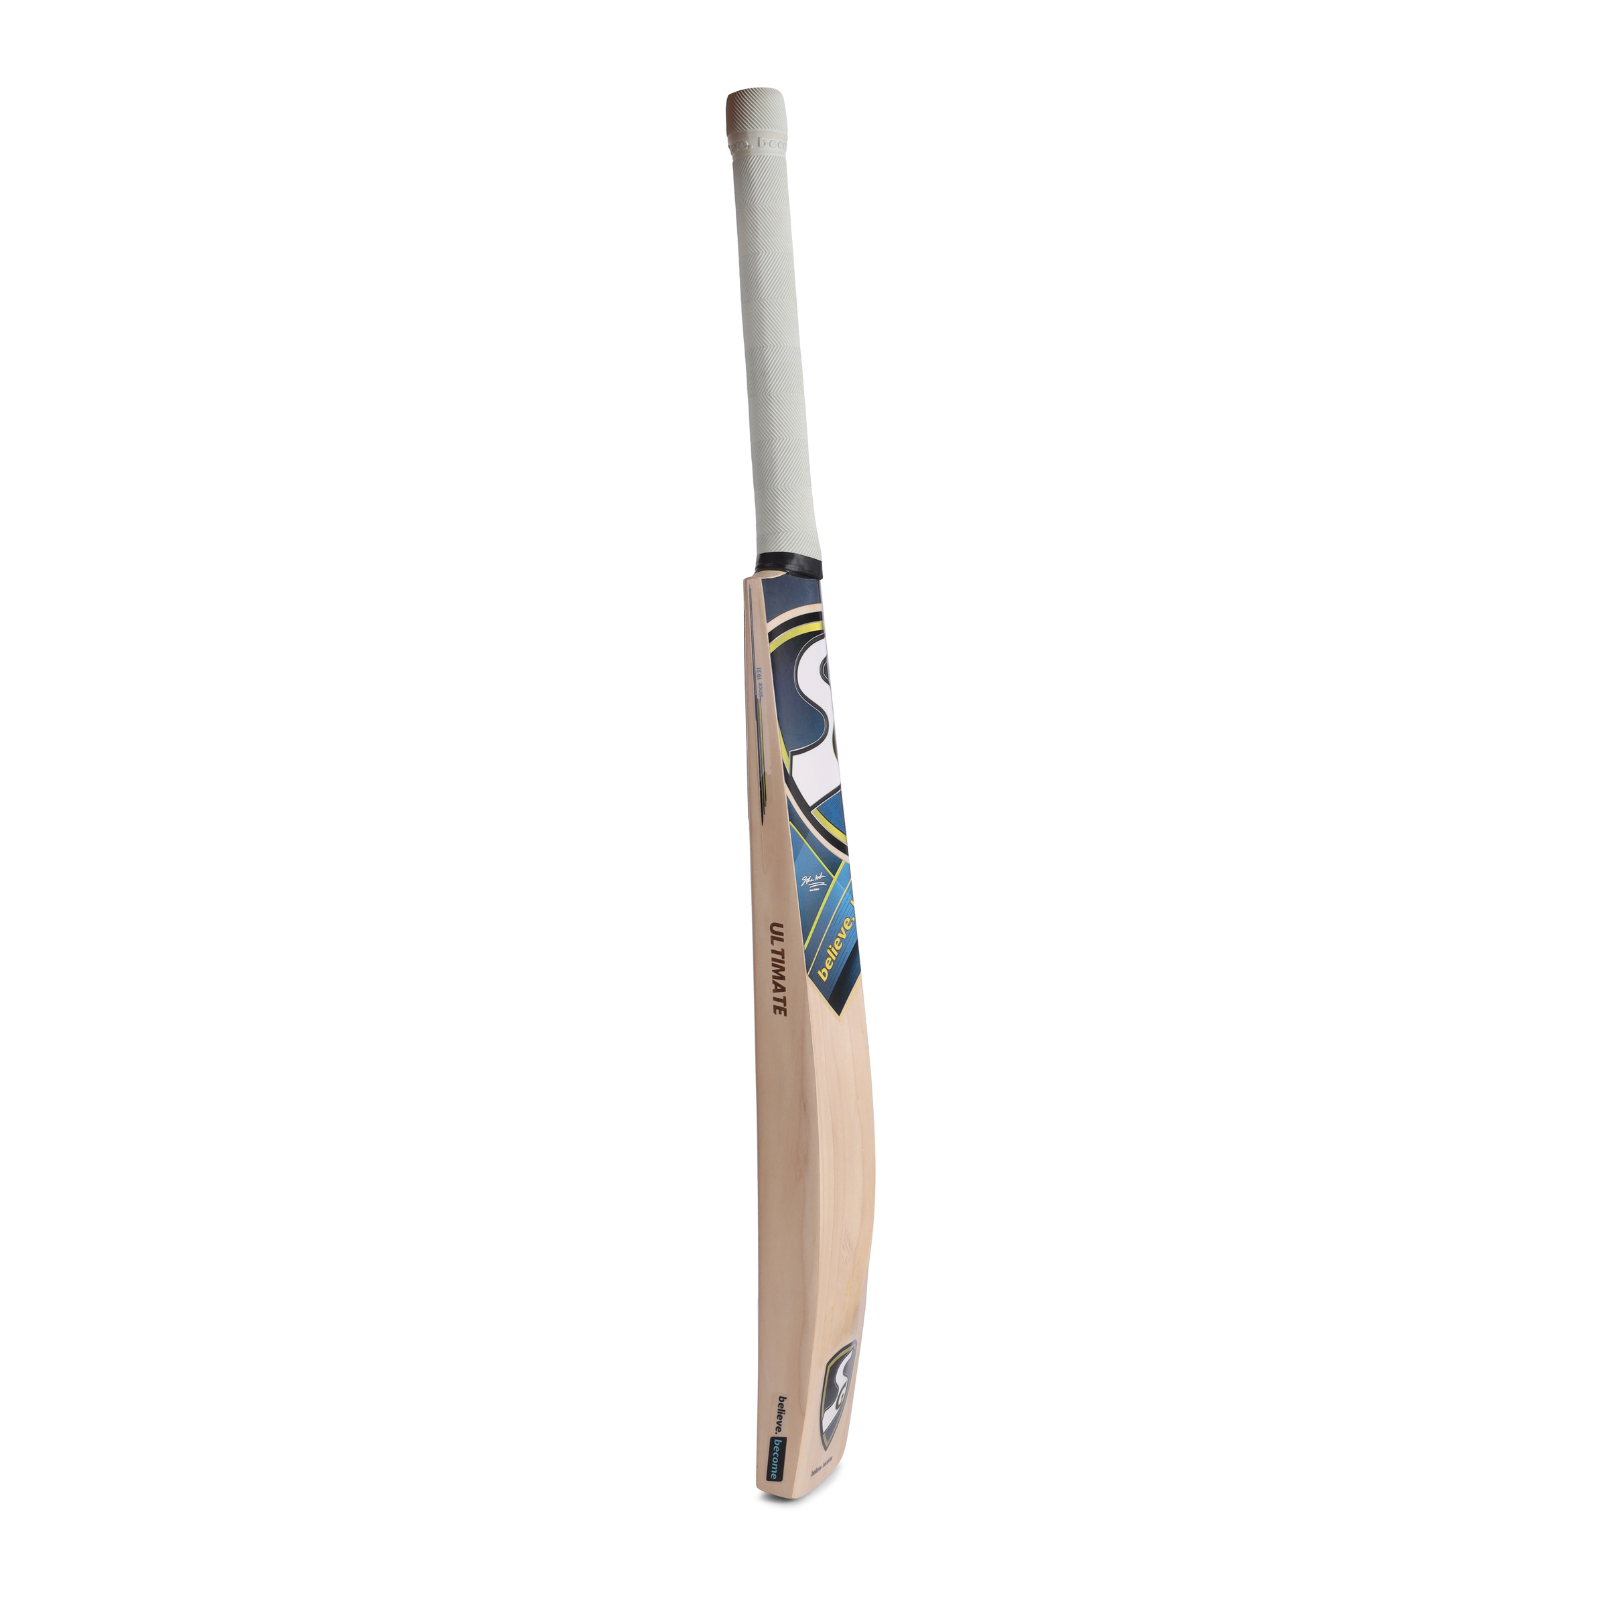 SG IK Ultimate English Willow Cricket Bat (Ishan Kishan Series)